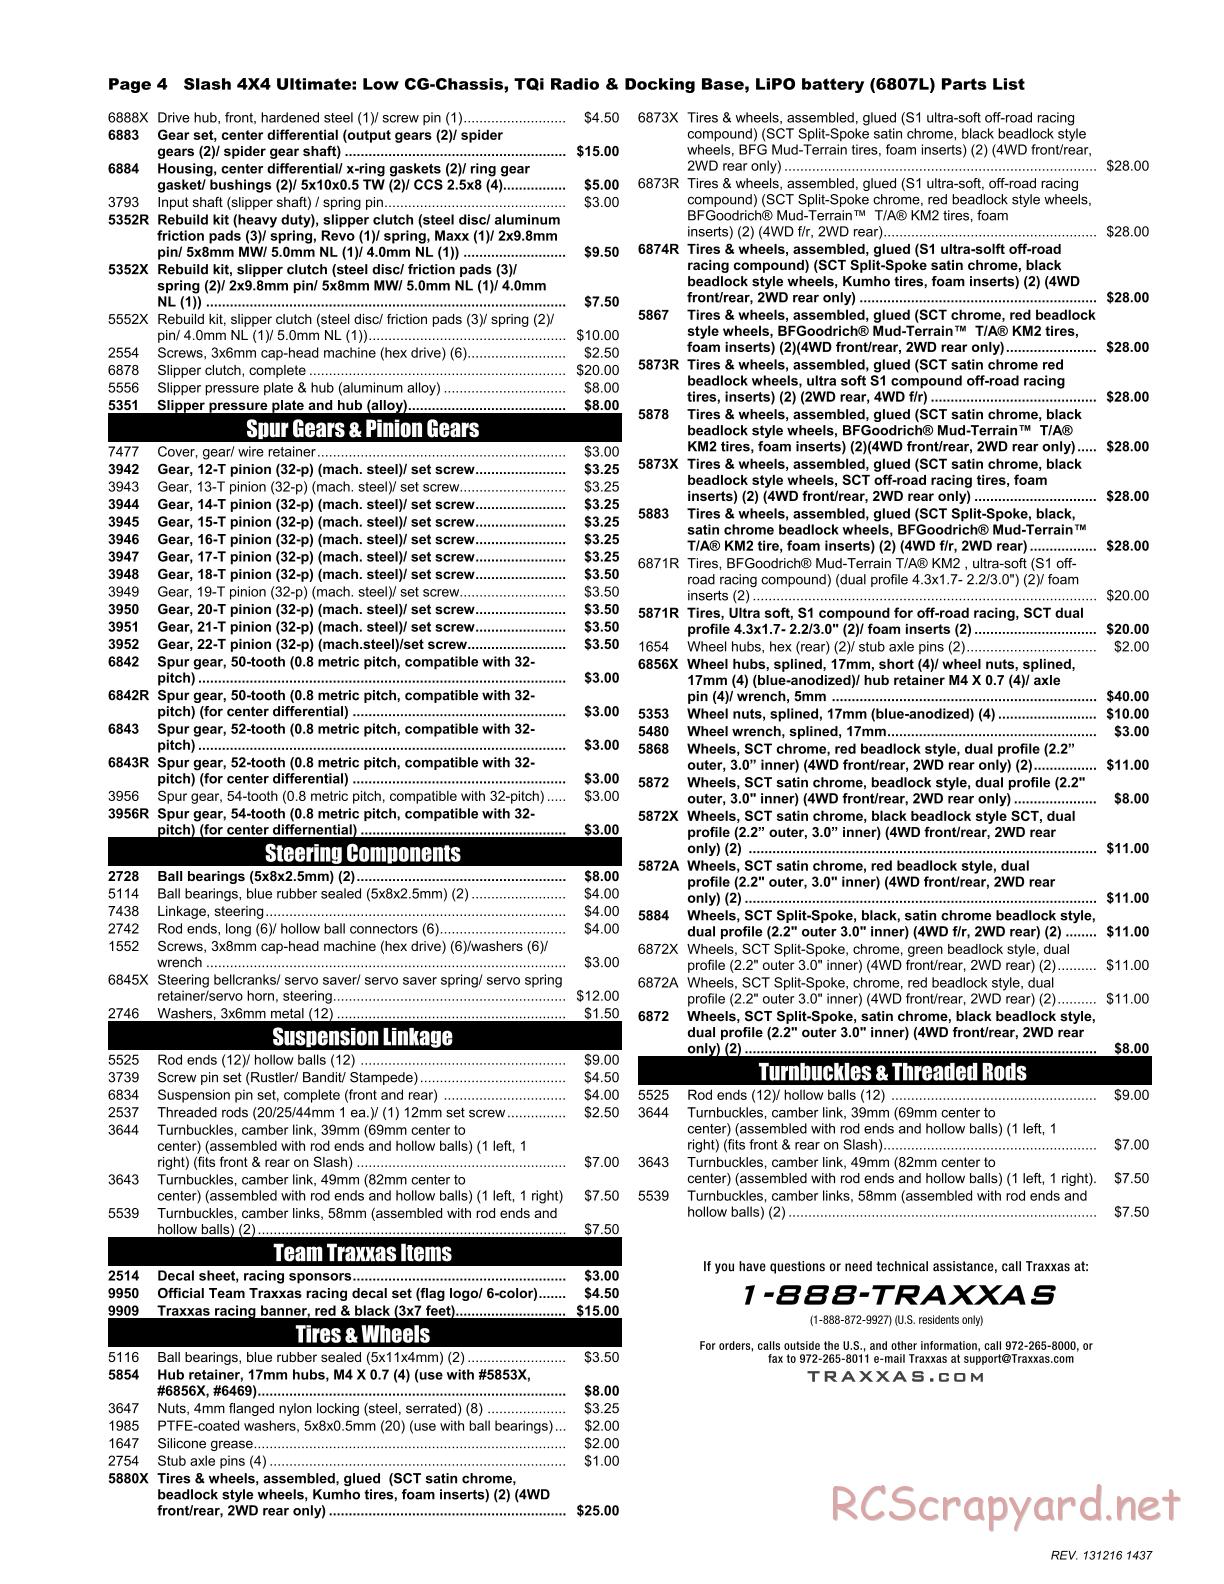 Traxxas - Slash 4x4 Ultimate LiPo (2012) - Parts List - Page 4